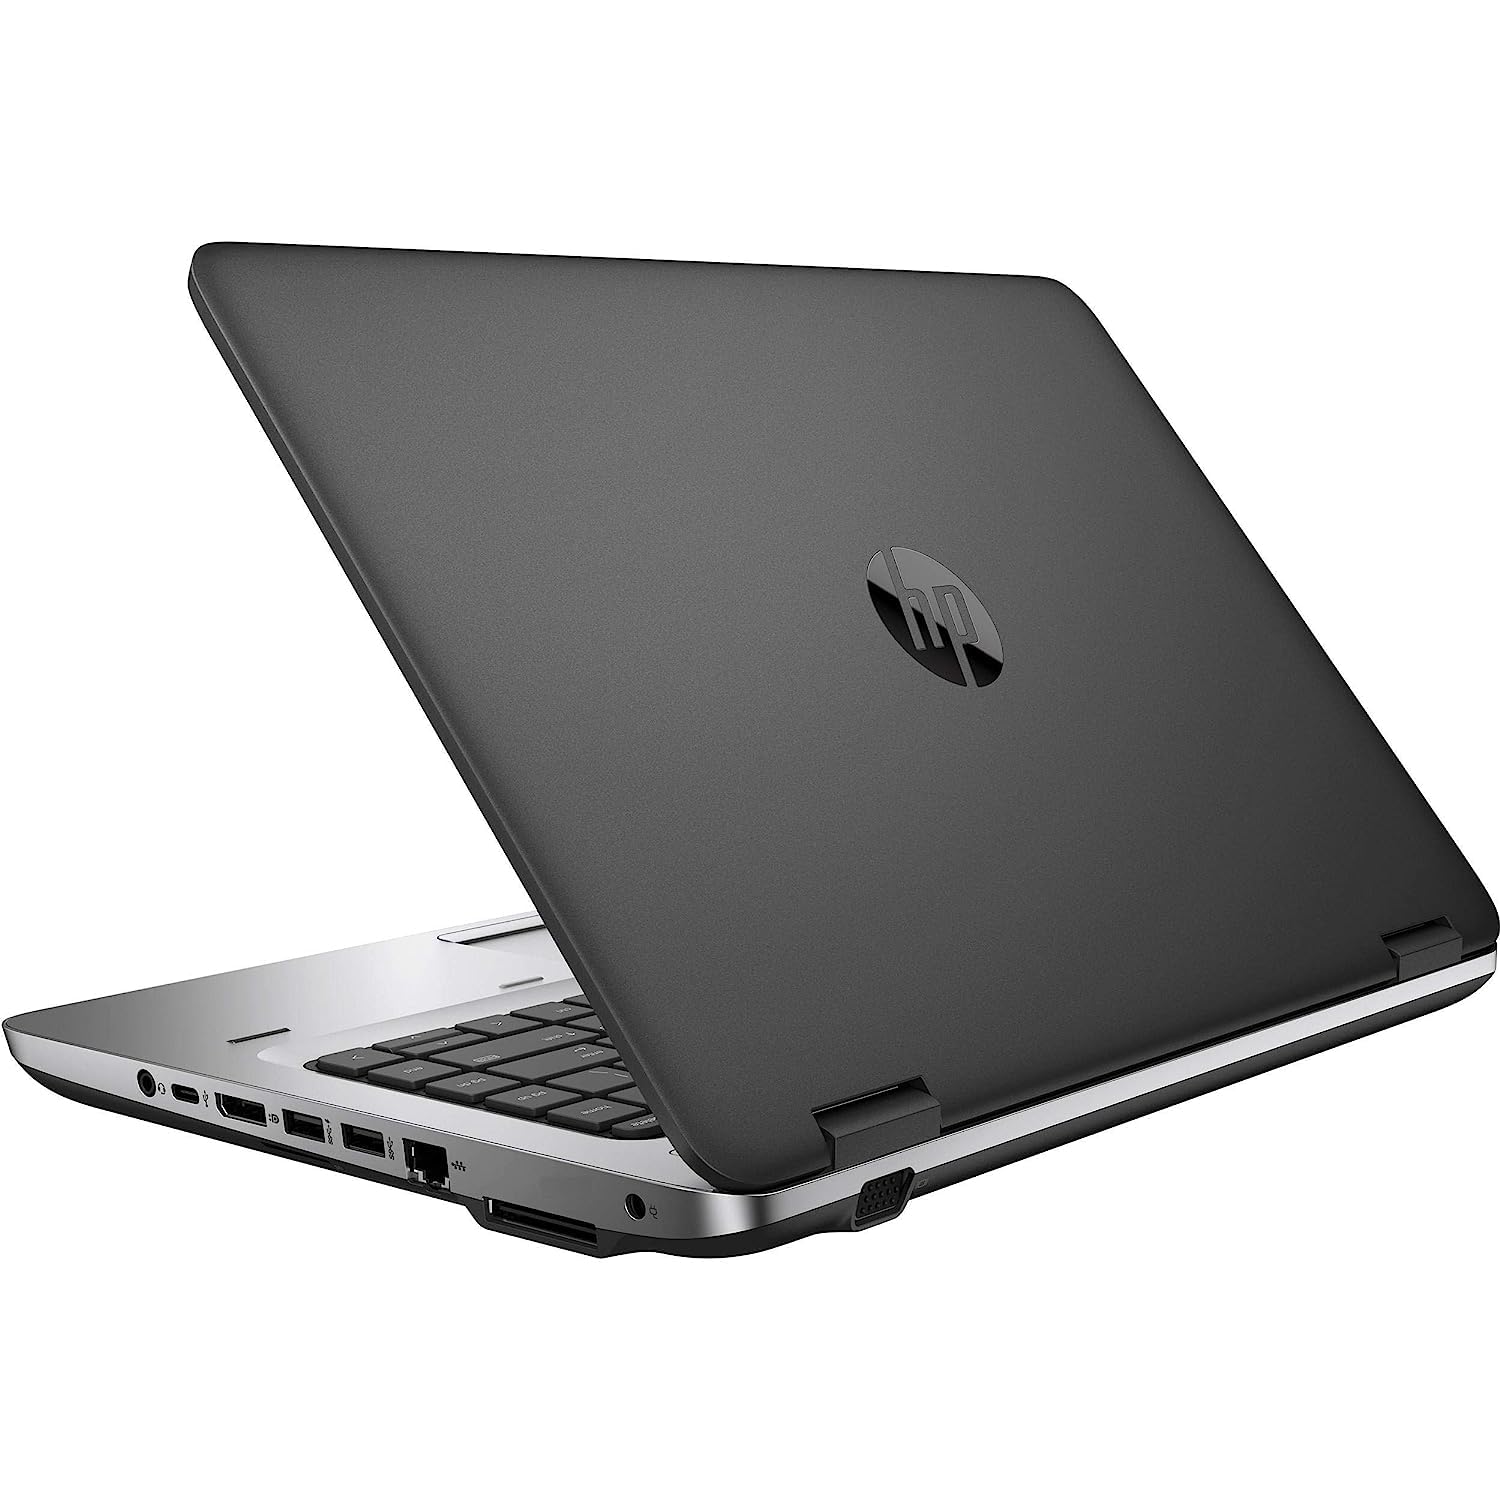 Refurbished HP ProBook 640 G2 i5 Laptop, 6th Gen, 8GB Ram, 256GB SSD